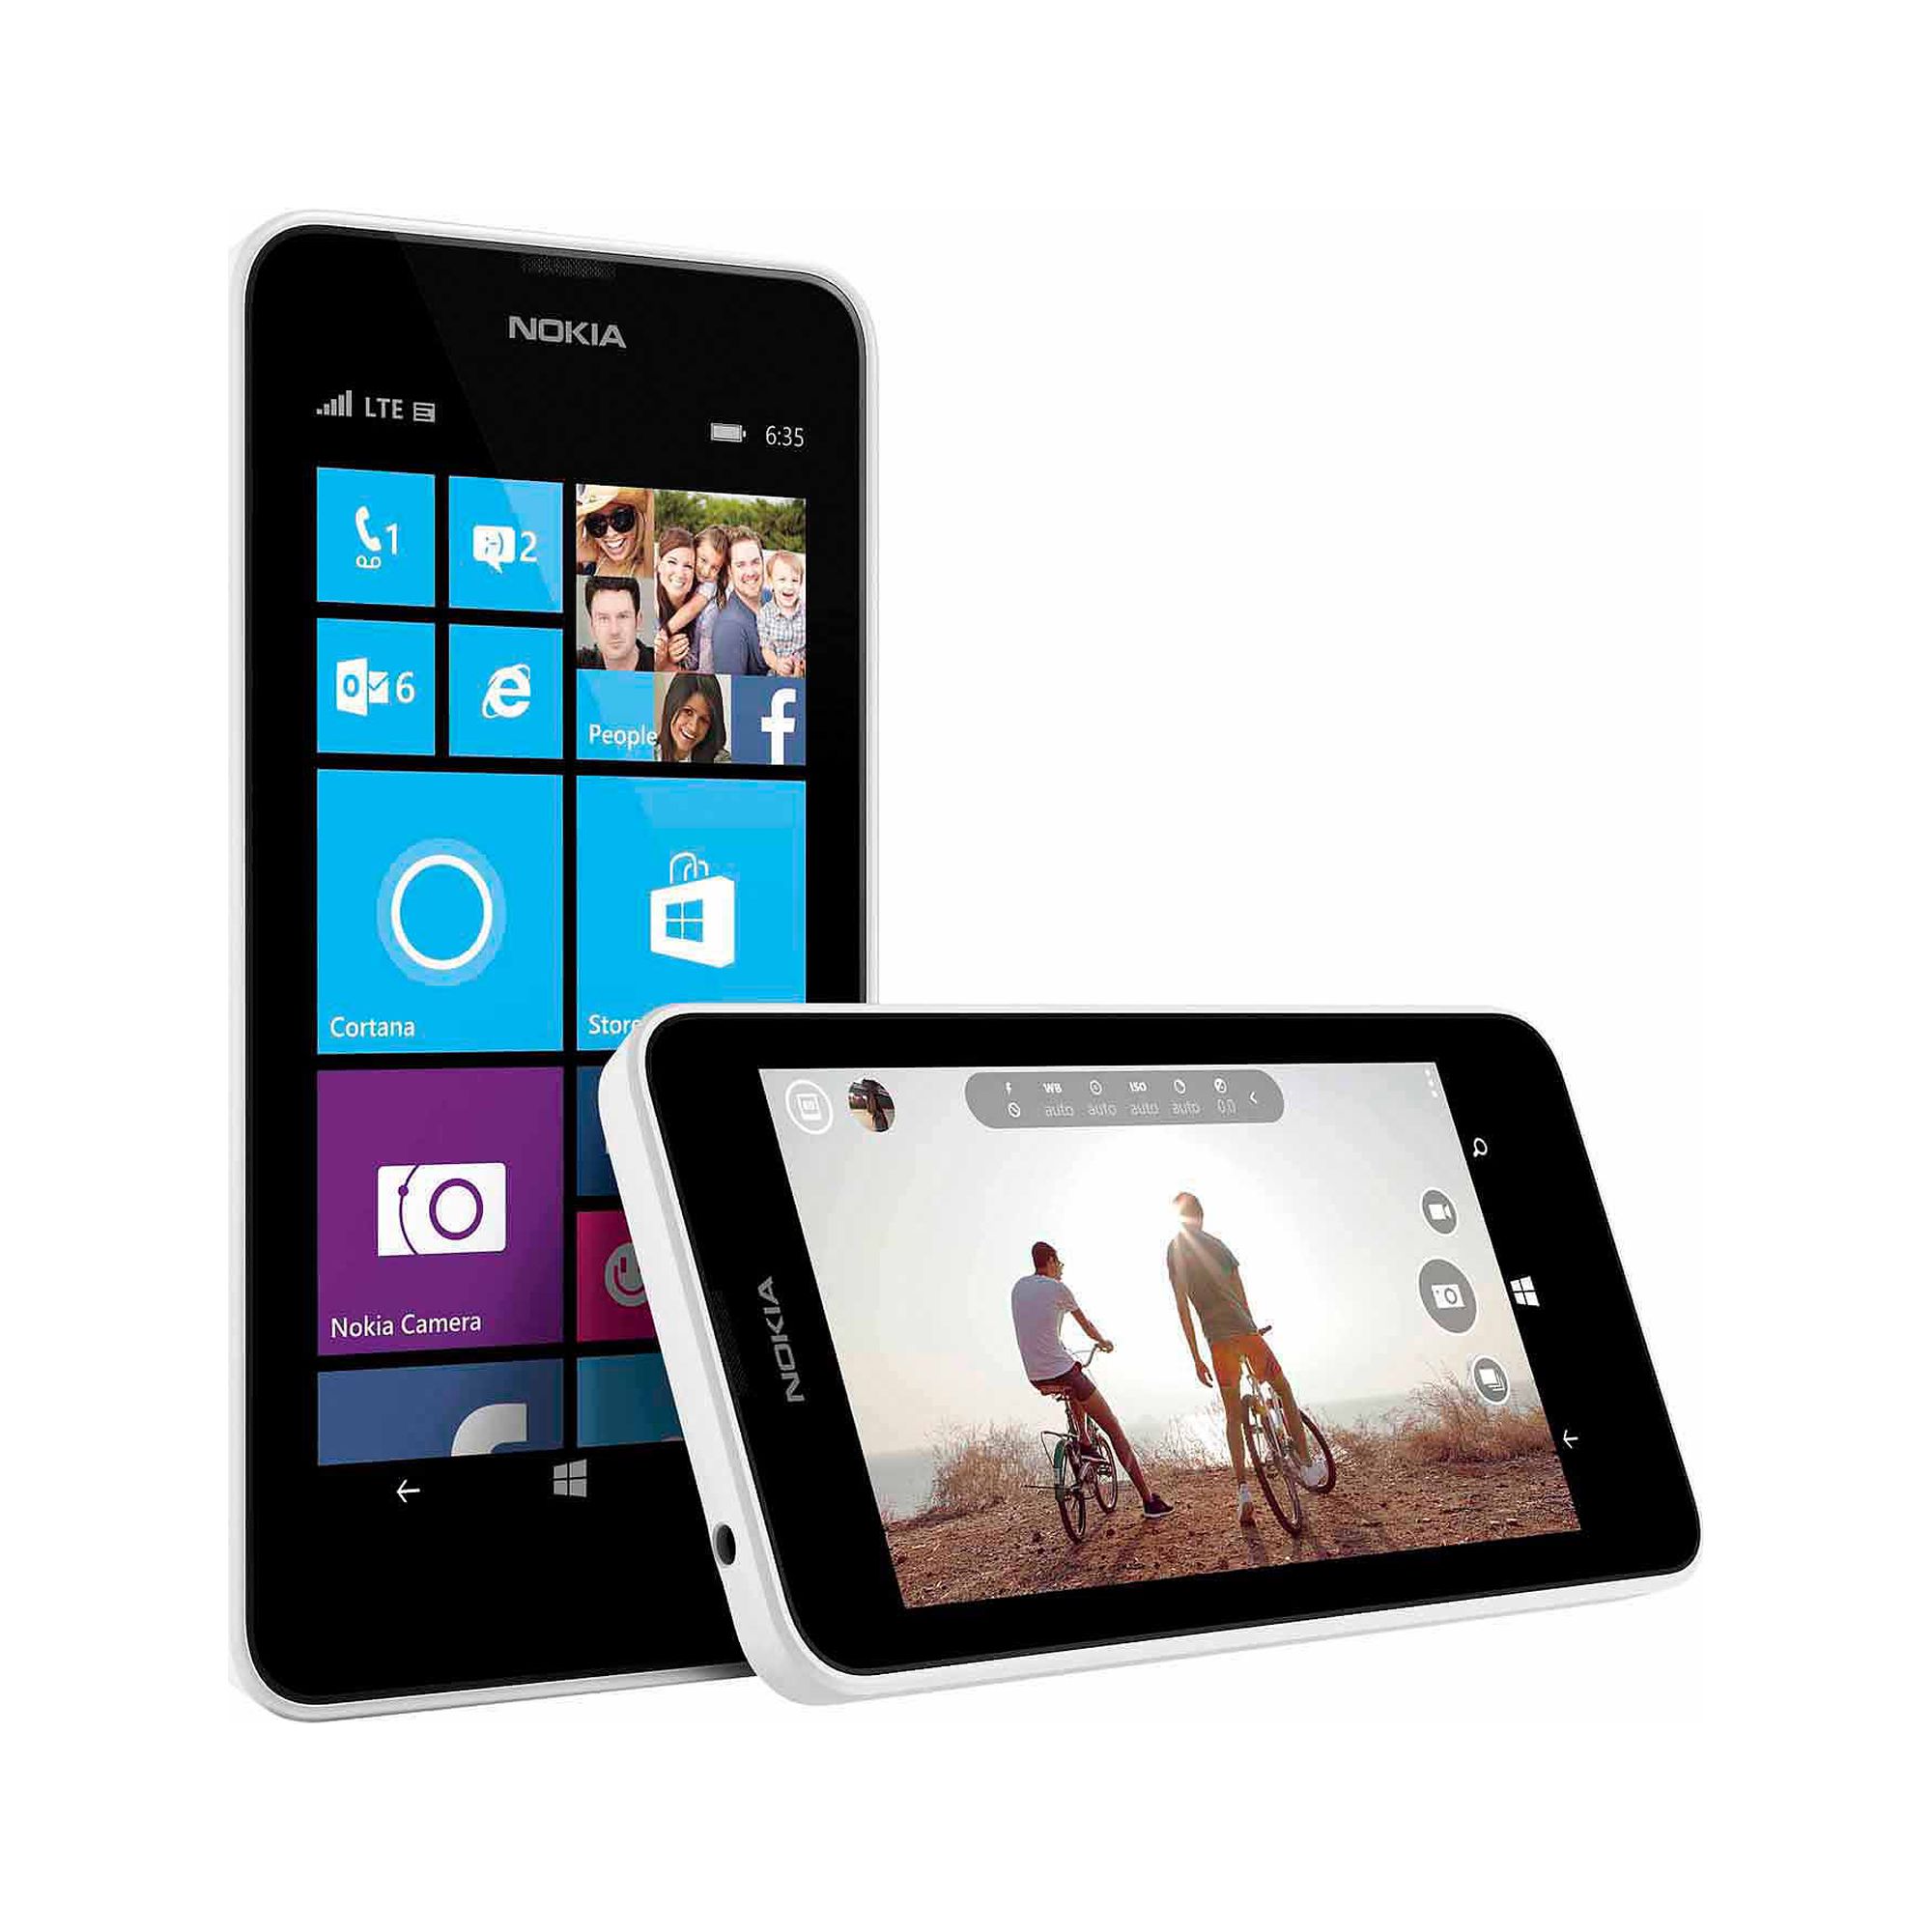 Nokia Lumia 635 8GB Unlocked GSM 4G LTE Windows 8.1 Quad-Core Phone - White - image 1 of 3